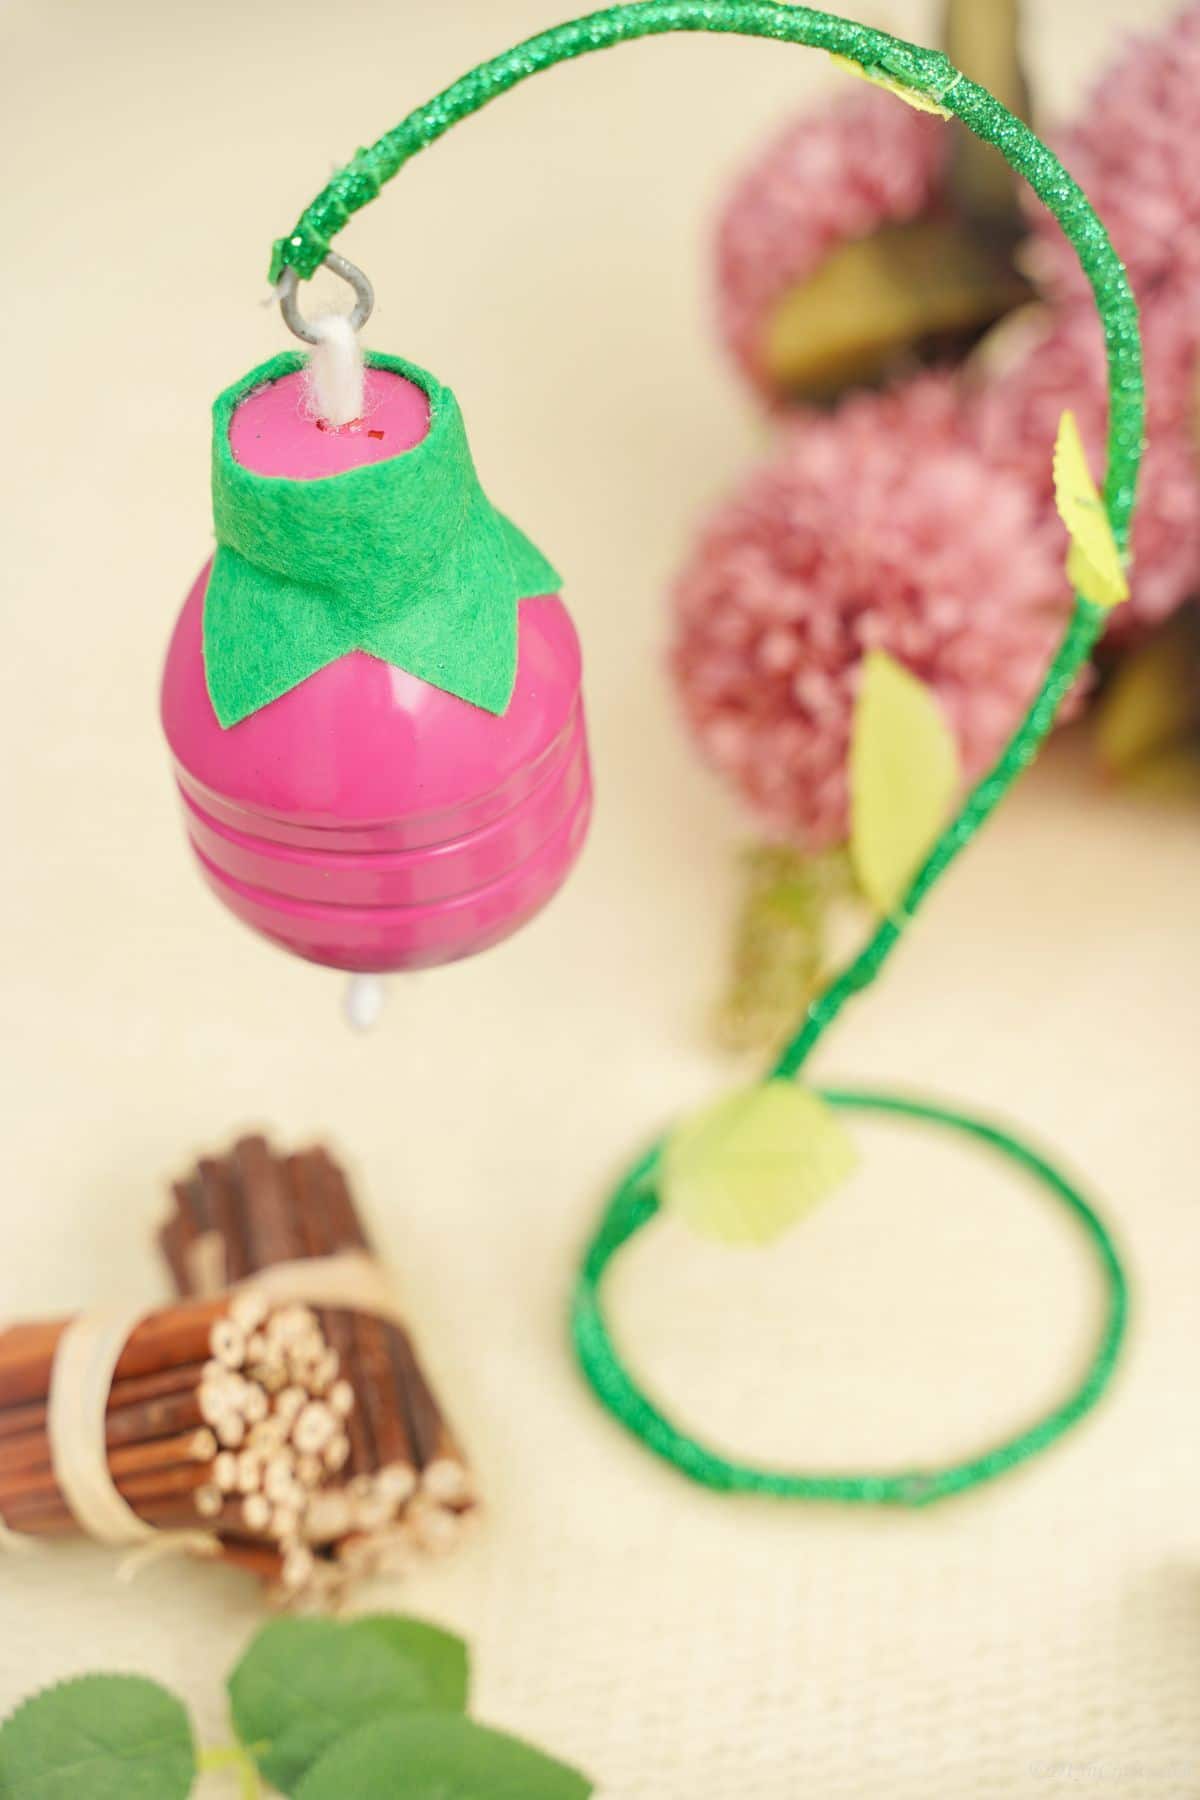 plastic bottle pink flower on green stem by cinnamon sticks